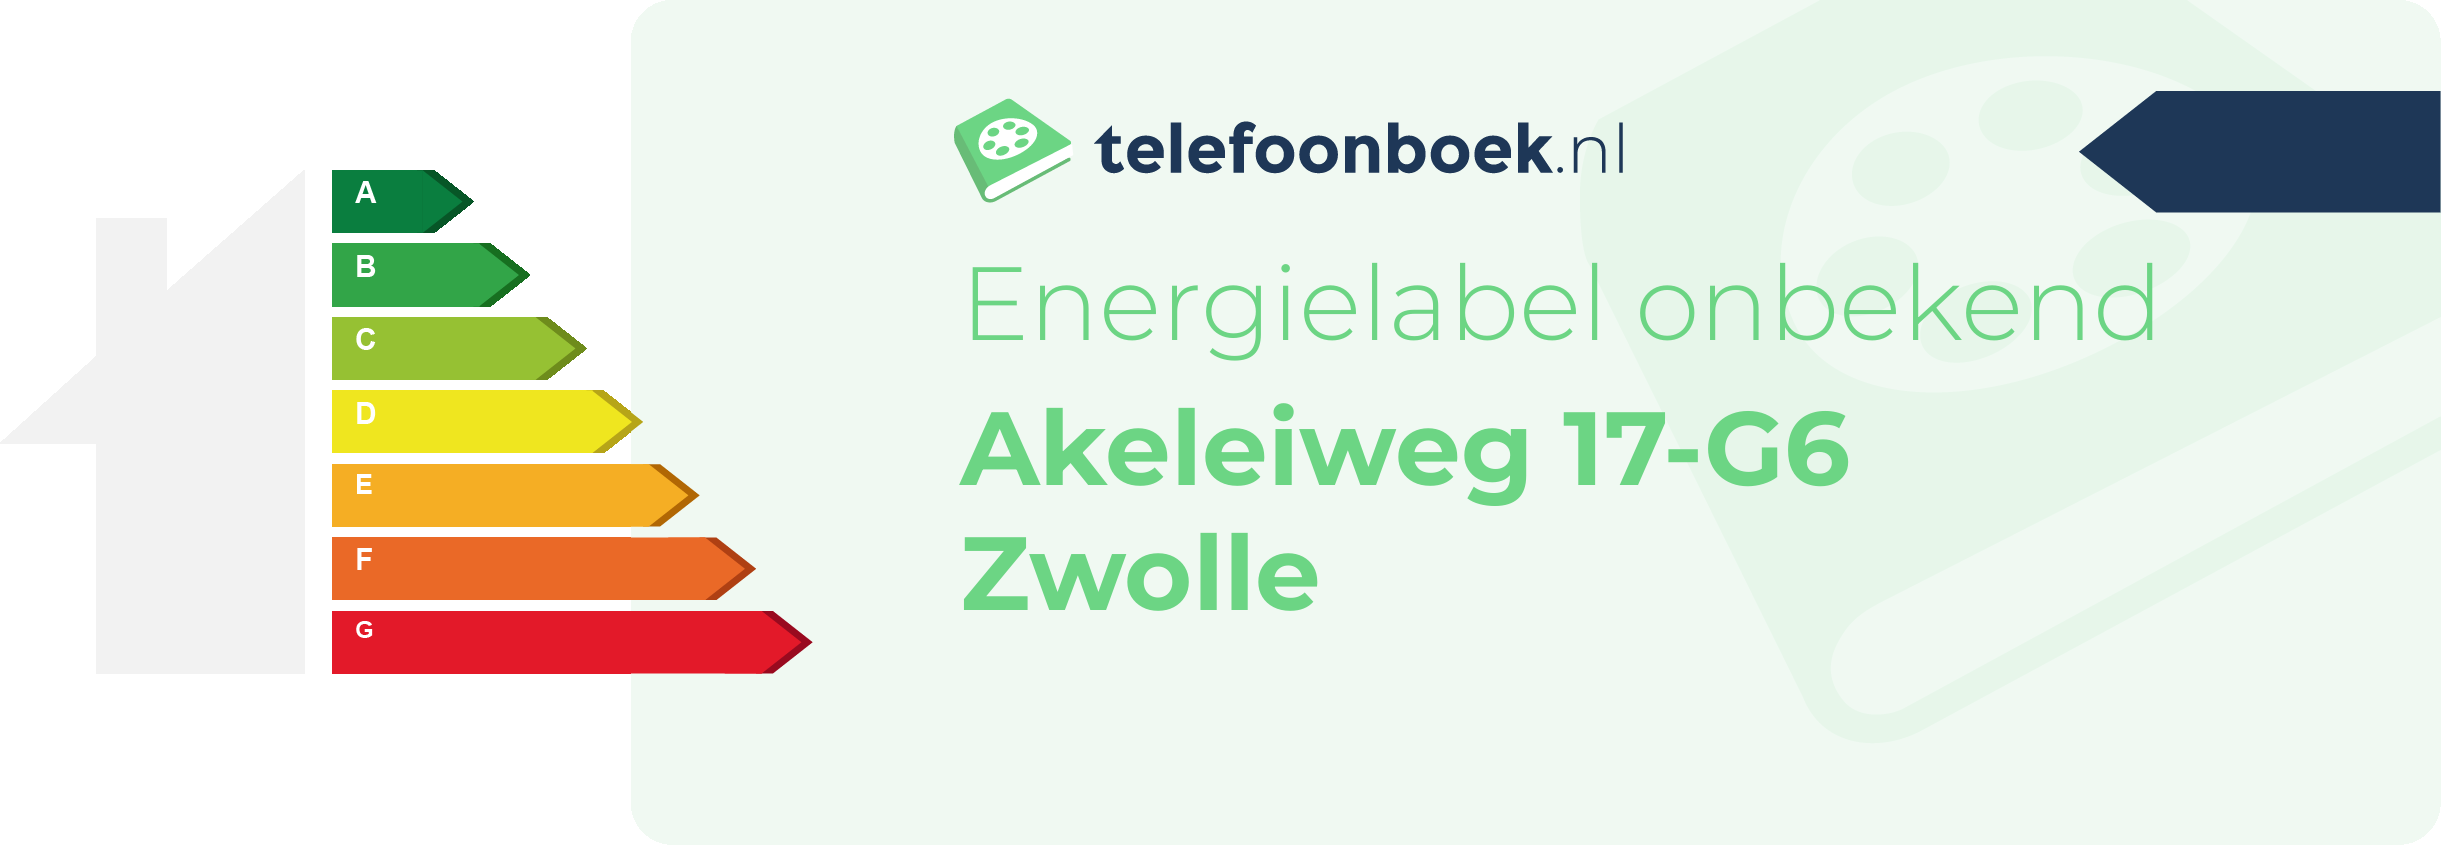 Energielabel Akeleiweg 17-G6 Zwolle